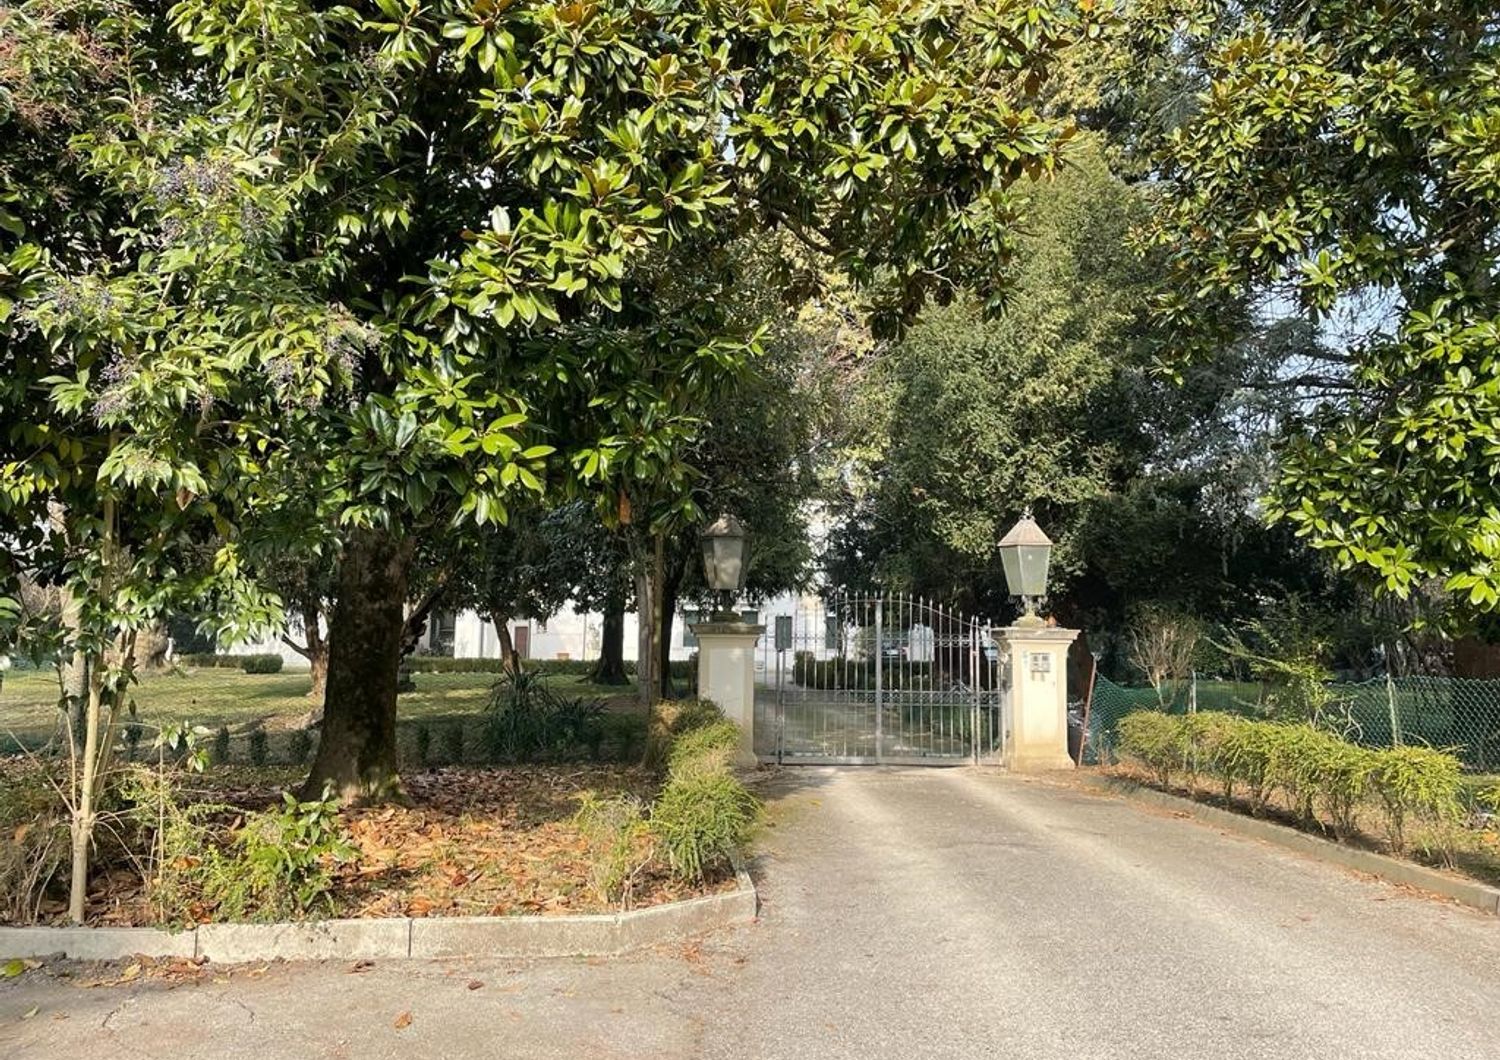 L'ingresso di villa Chiarle, dove viveva Maria Chiara Gavioli&nbsp;